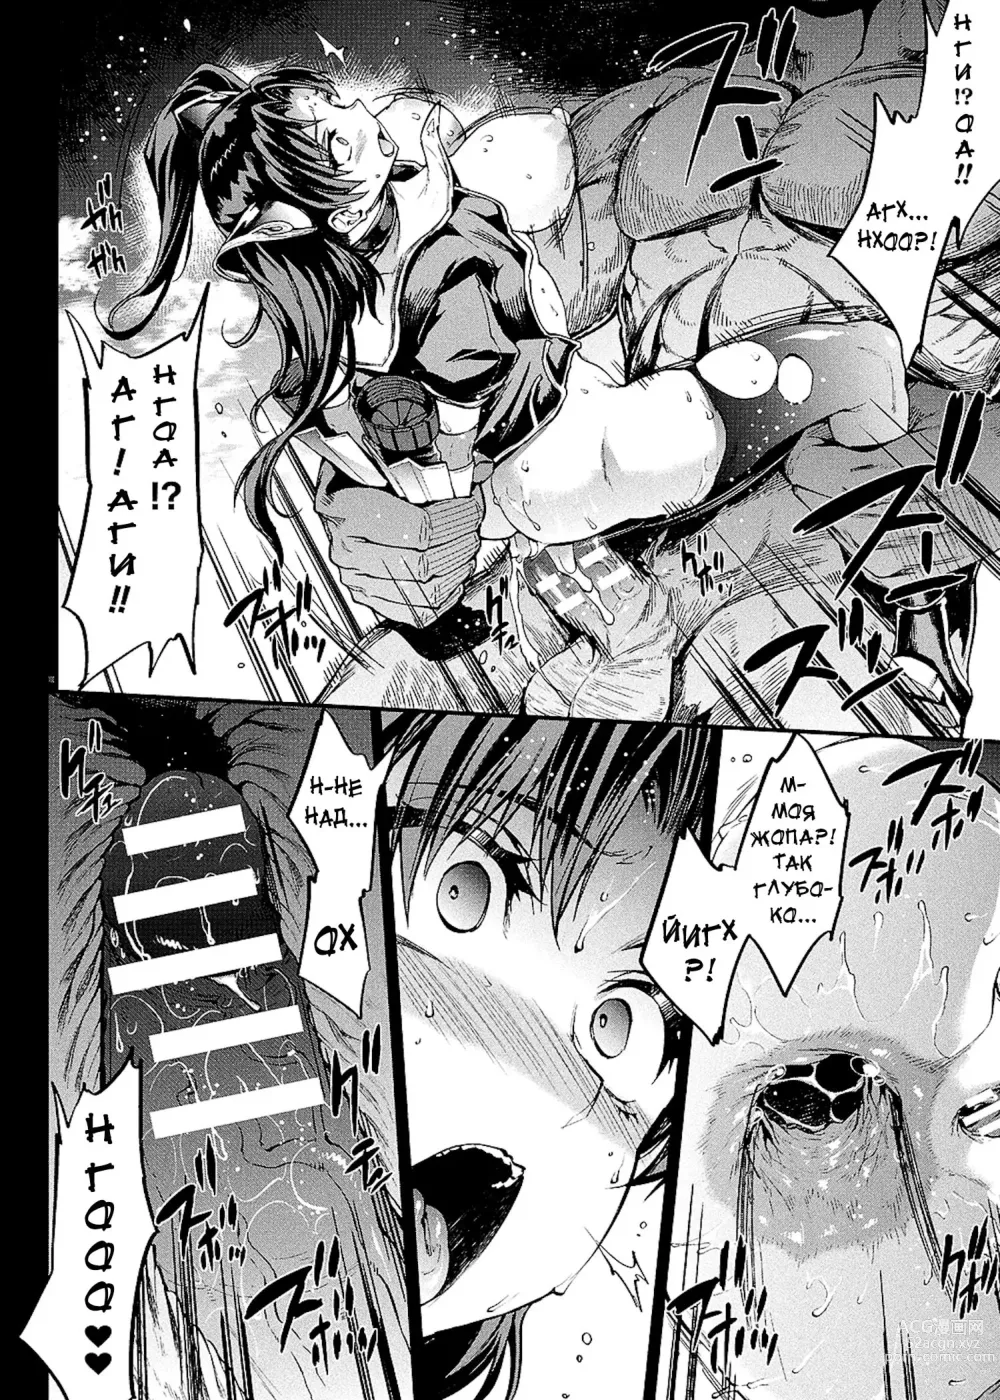 Page 193 of manga Raikou Shinki Igis Magia II -PANDRA saga 3rd ignition-